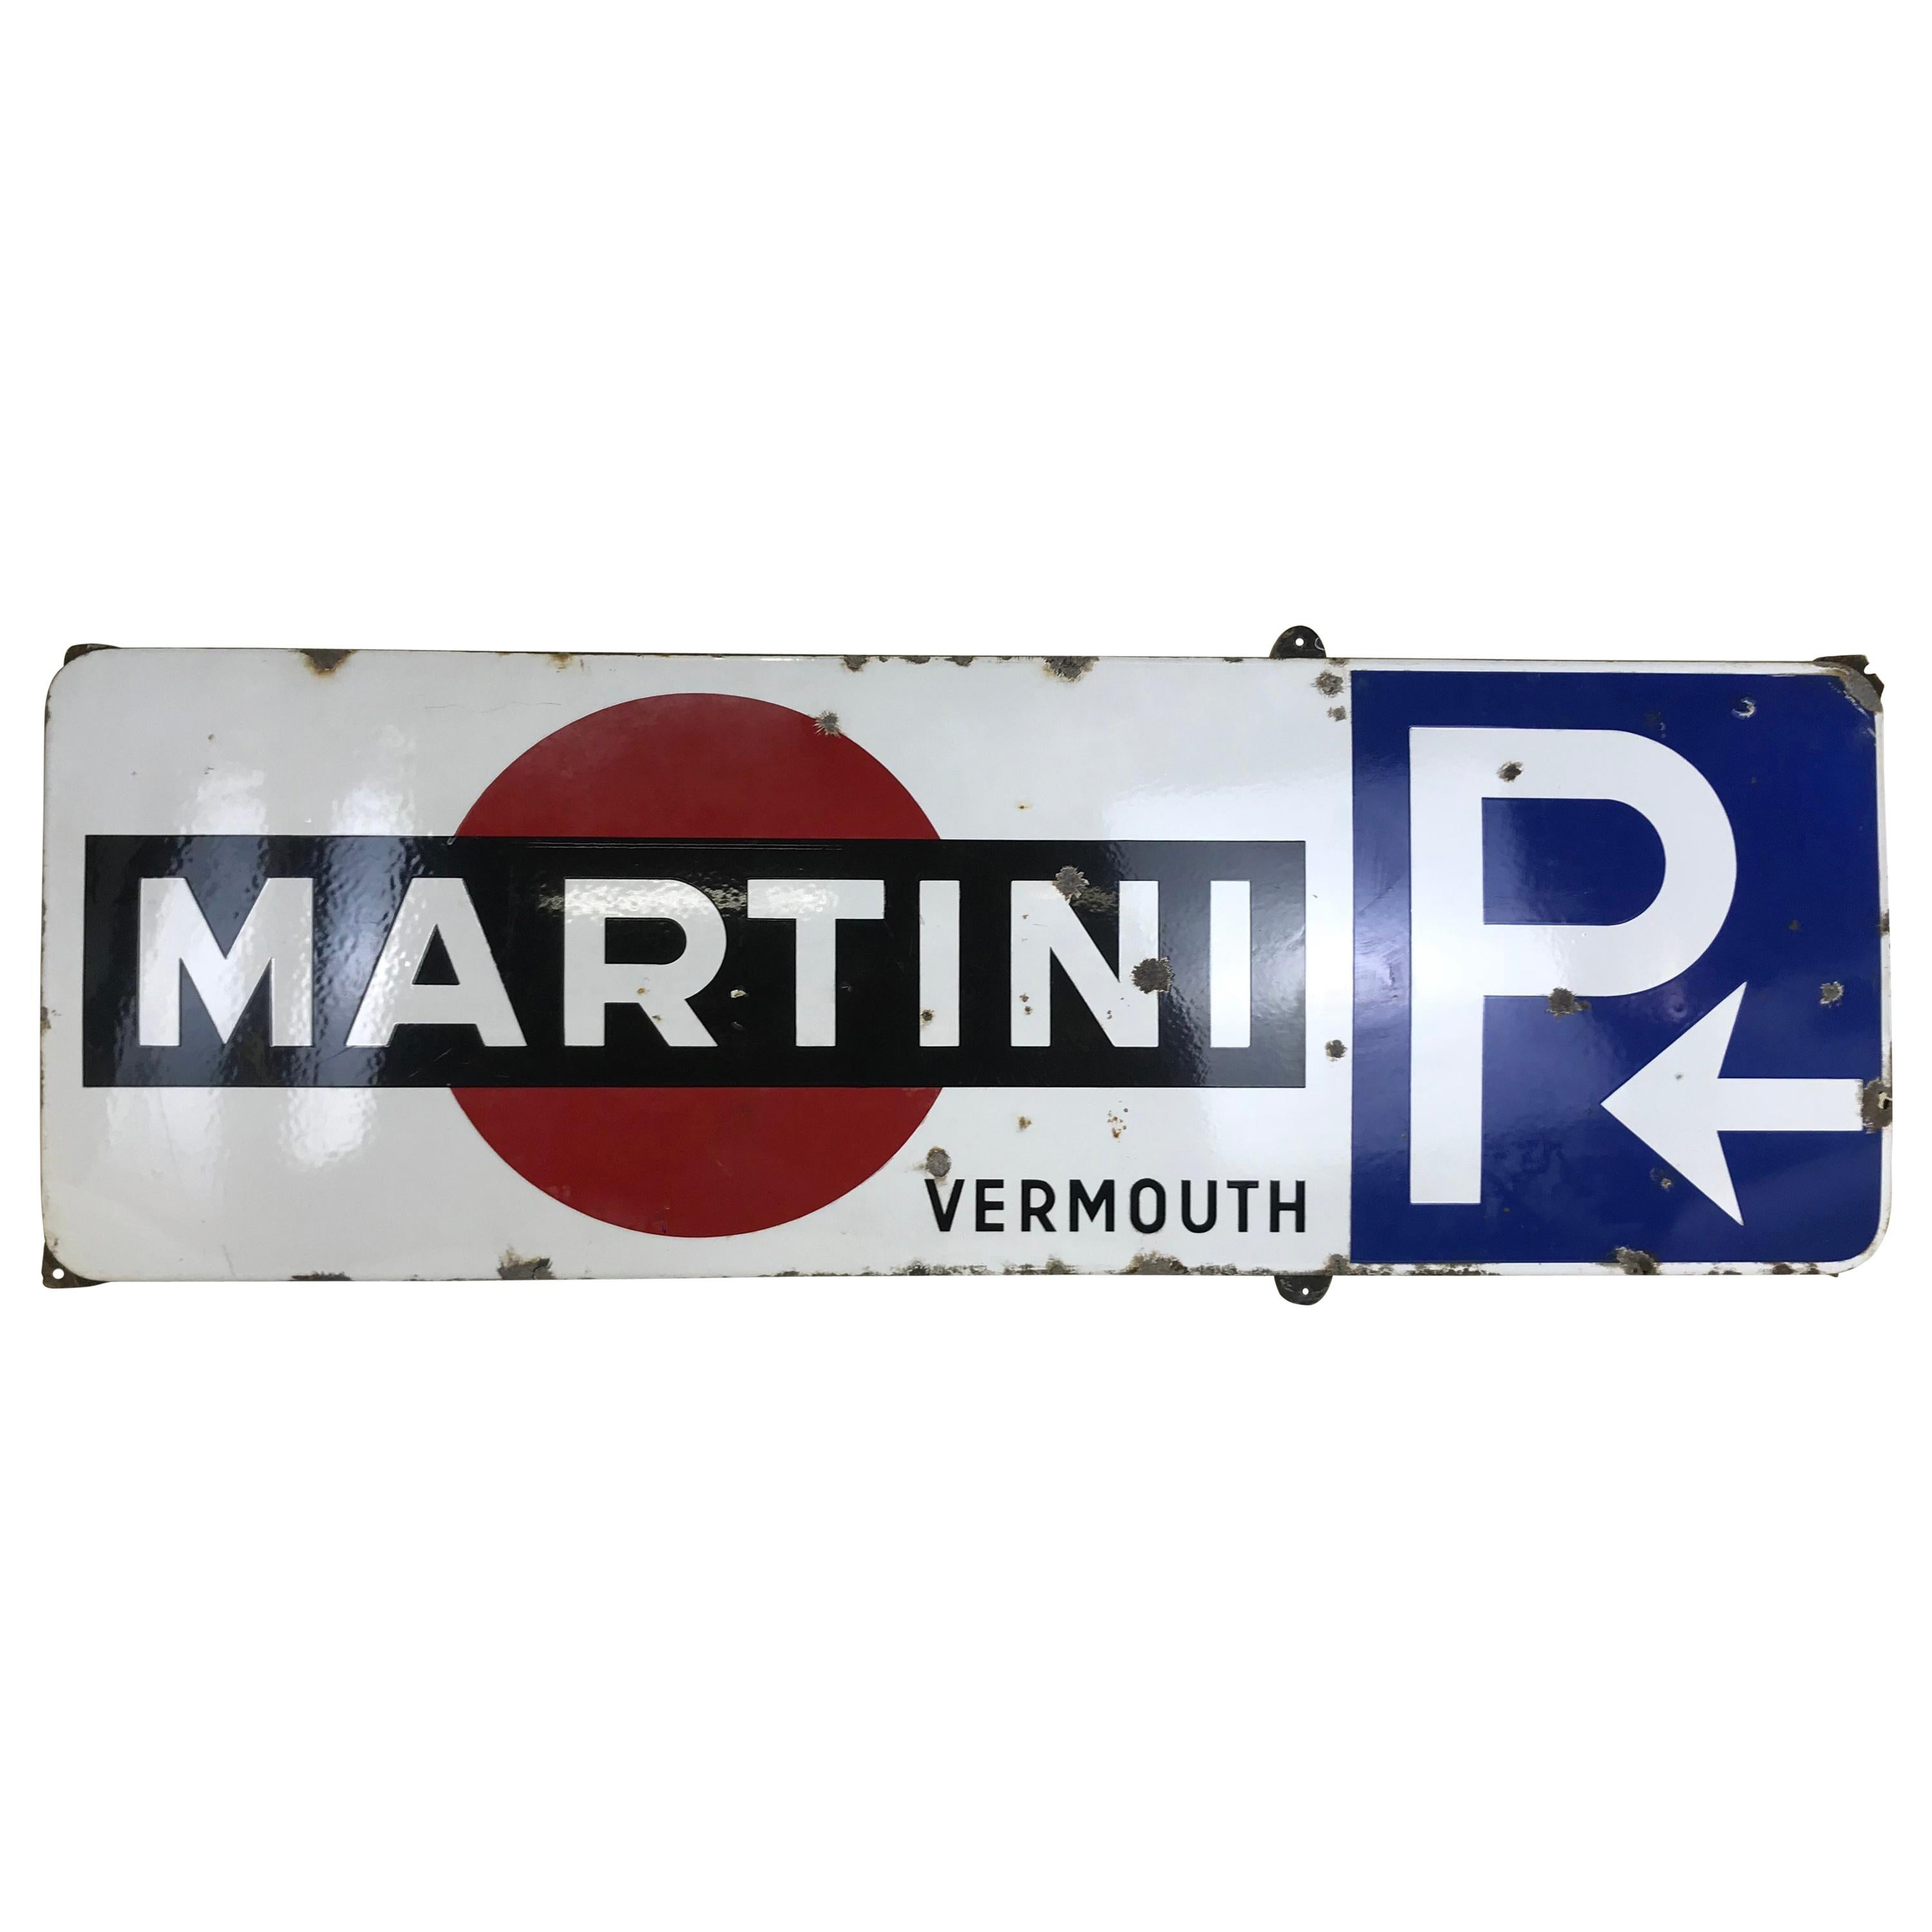 1950s Vintage Enamel Metal Belgian Advertising Martini Sign with Parking Signal For Sale